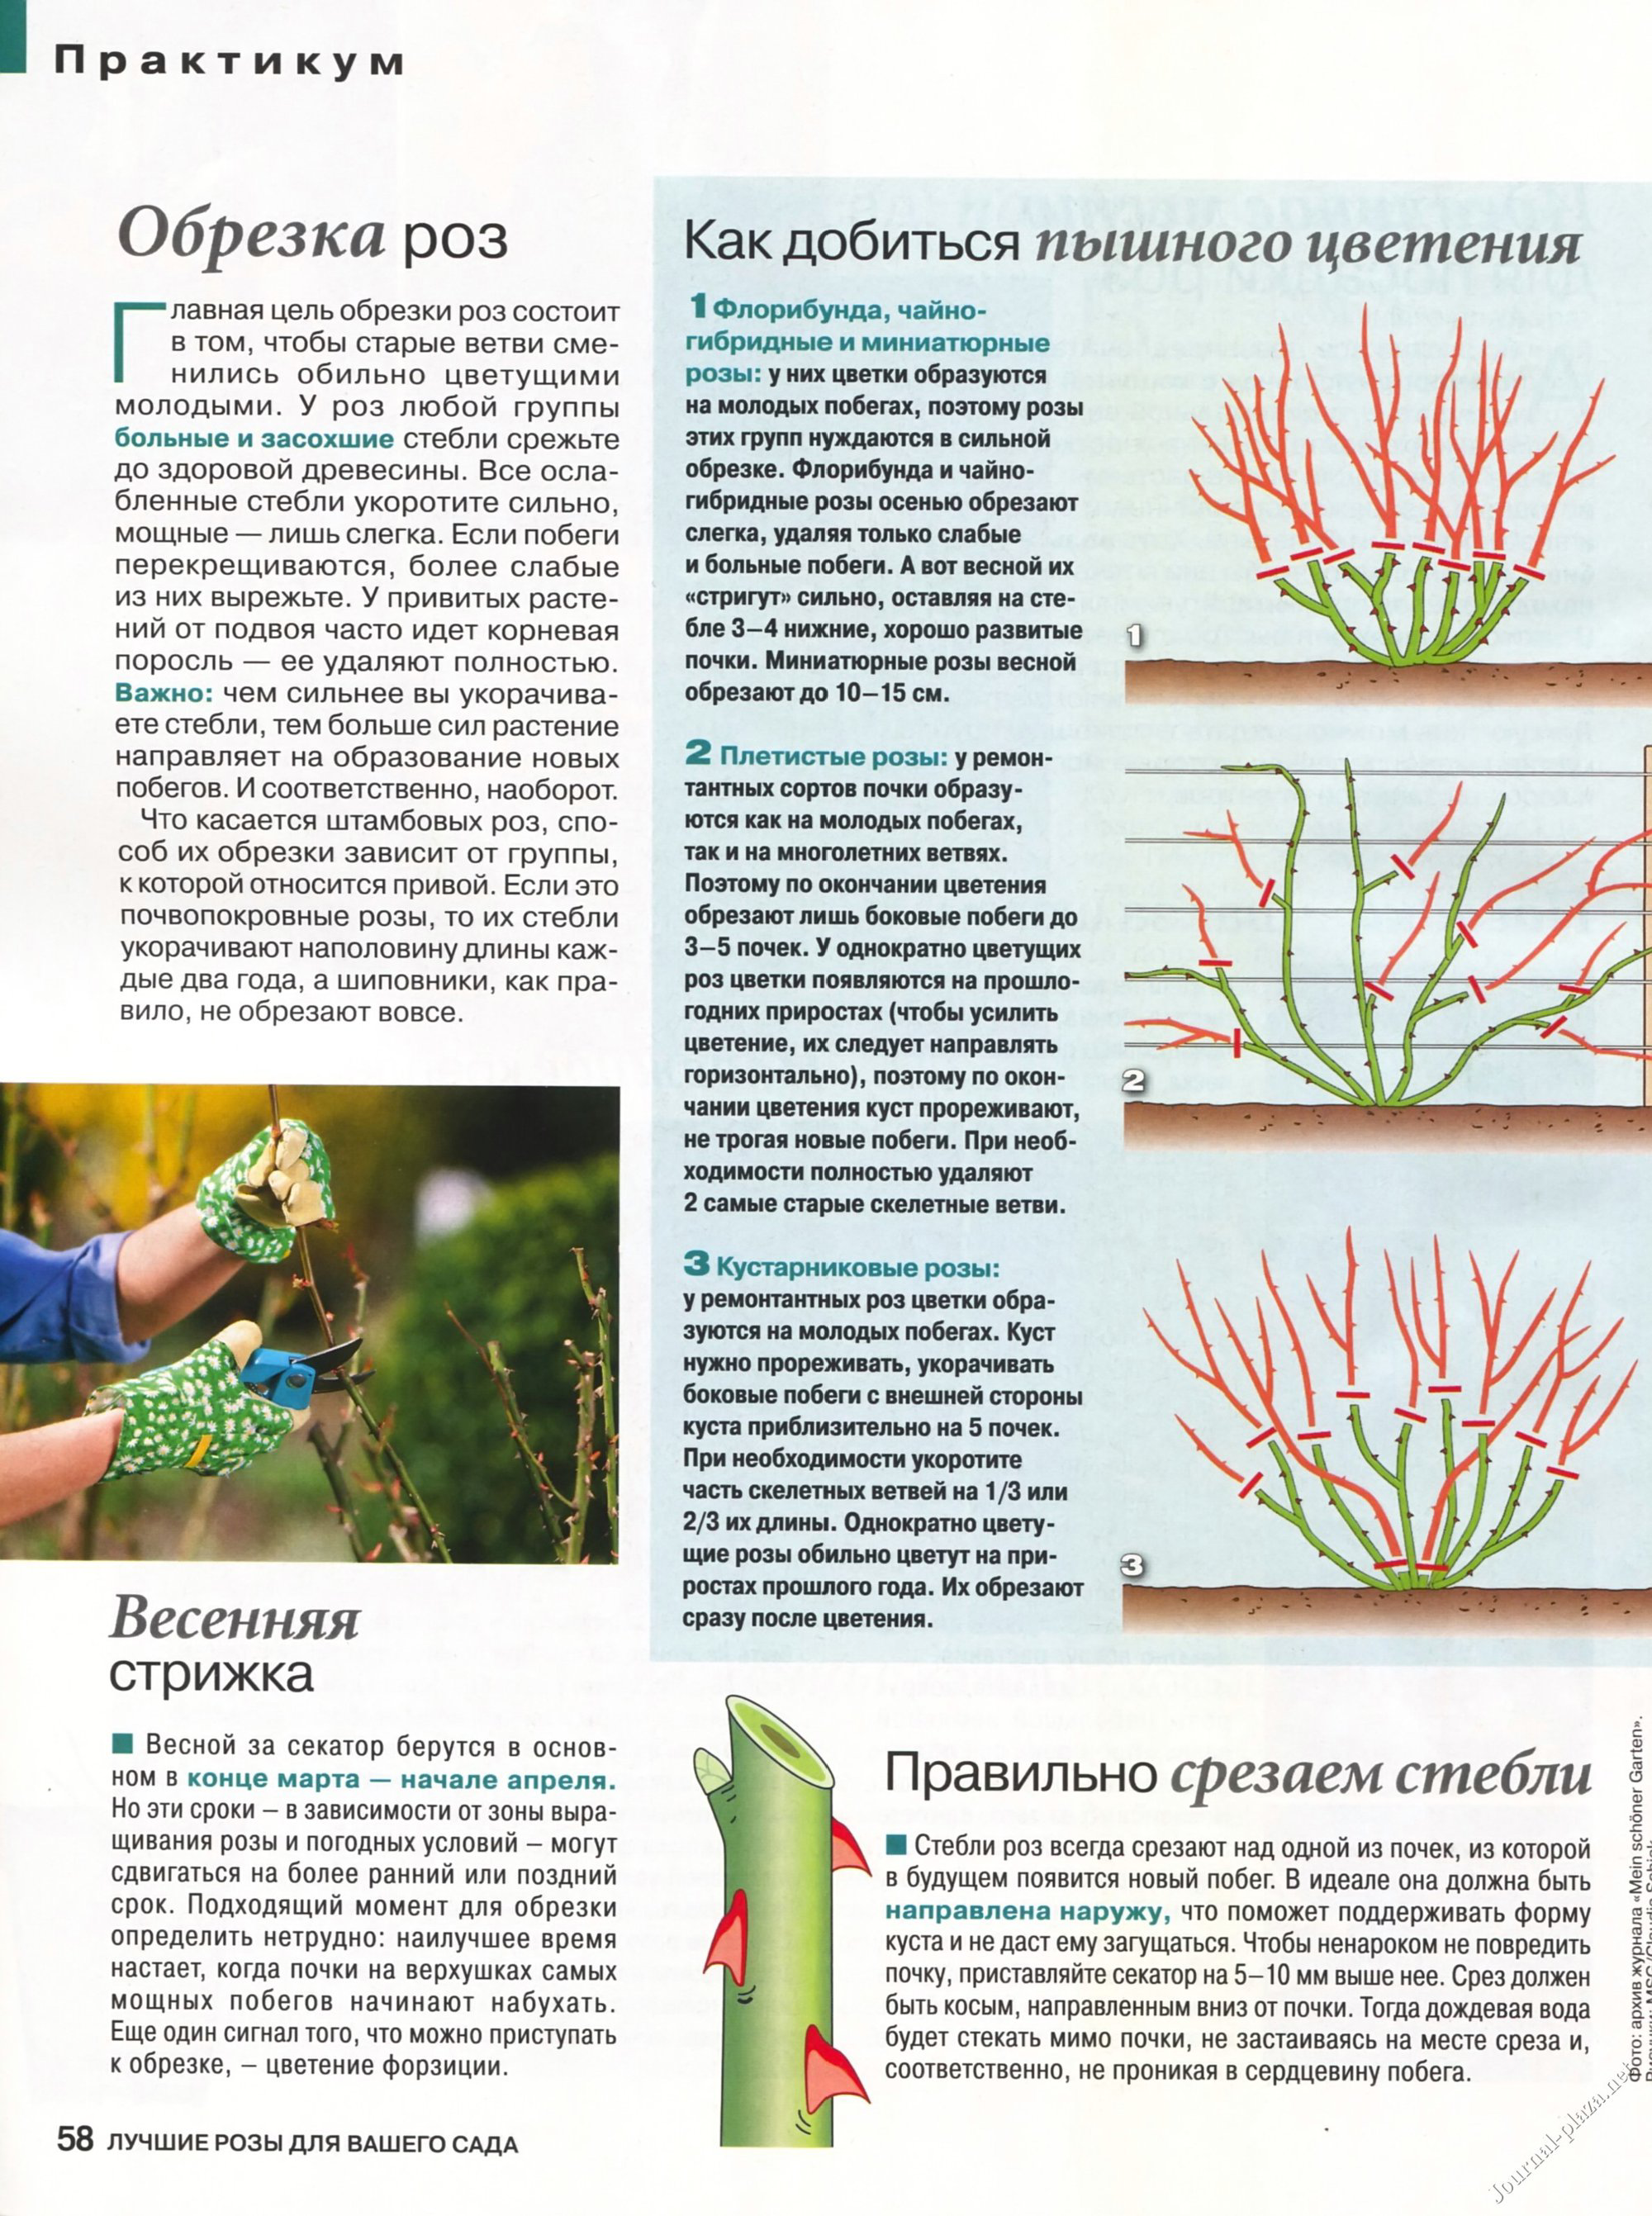 Роза пэт остин: описание и характеристики сорта, выращивание и размножение